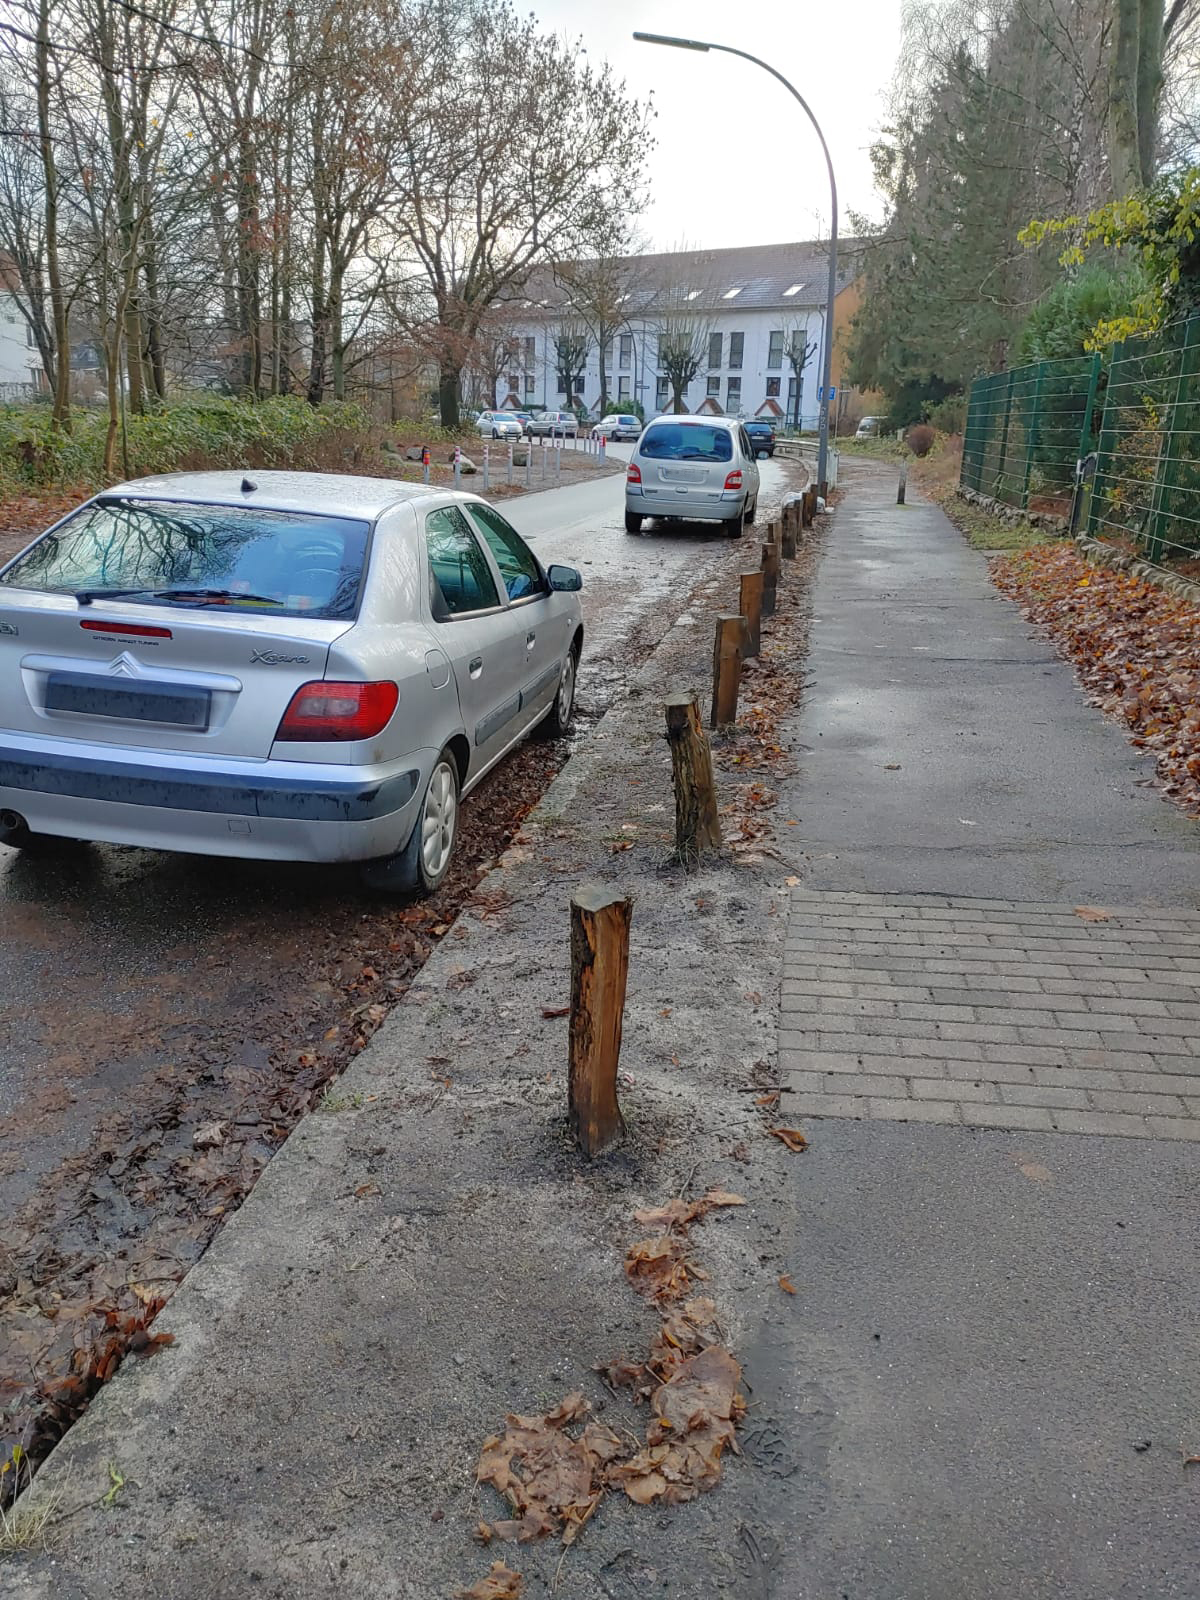 Eichenpfähle gegen Bürger-Bedarfe: FDP-Fraktion Wandsbek kritisiert Parkplatzvernichtung in der Jenfelder Straße